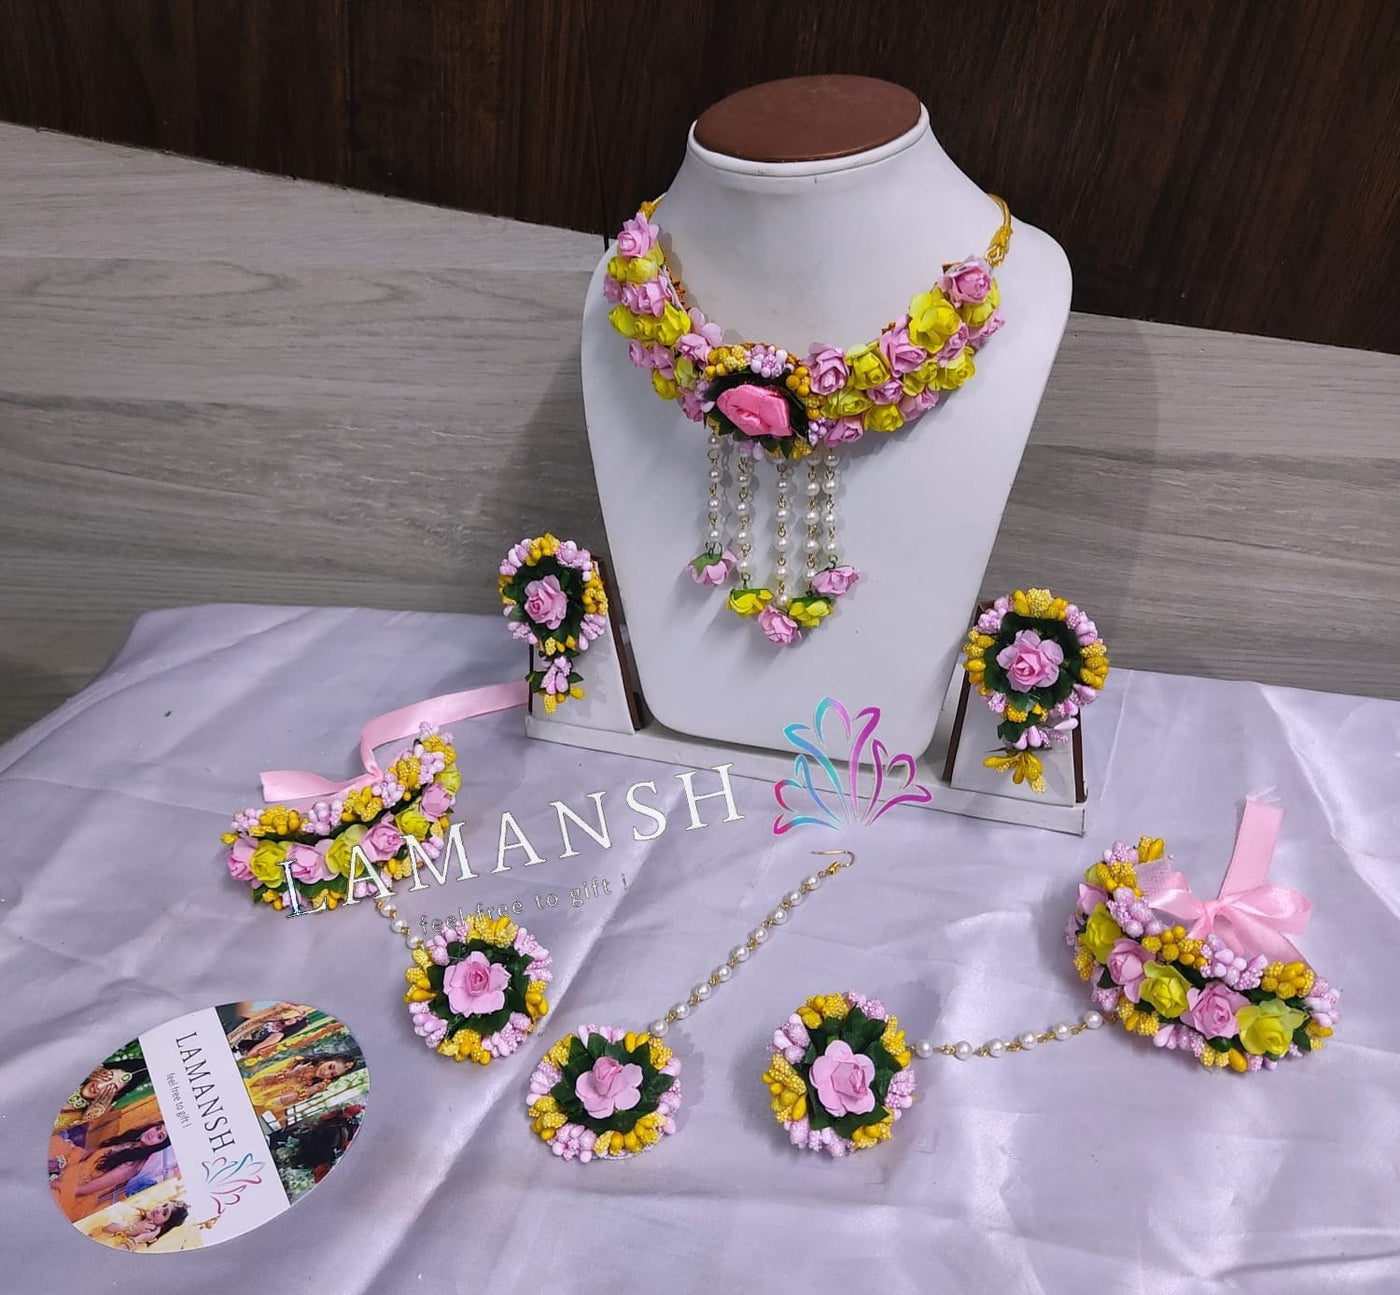 Lamansh Flower 🌺 Jewellery 1 Necklace, 2 Earrings ,1 Maangtika & 2 Bracelets Attached with Ring set / Pink- yellow LAMANSH® Handmade Flower Jewellery Set For Women & Girls / Haldi Set